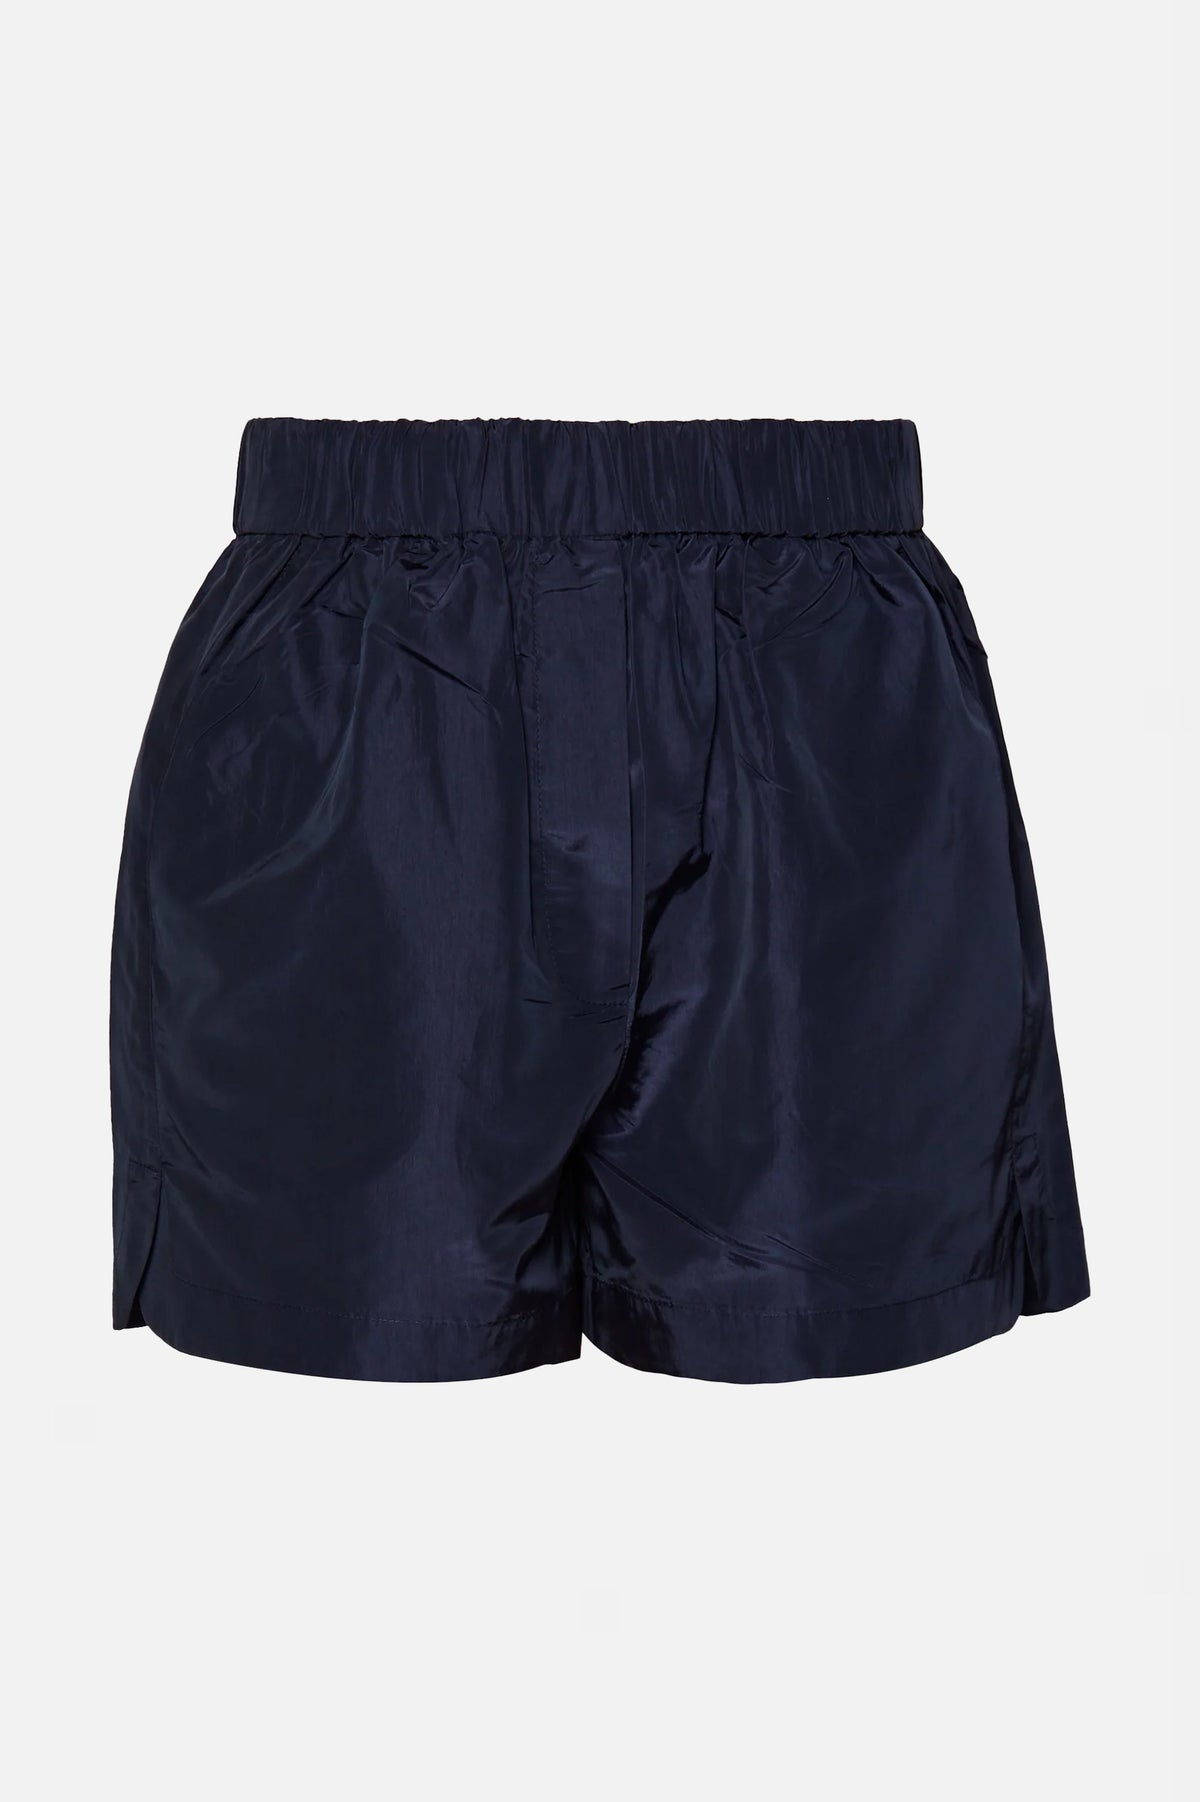 Silk Nylon Pull On Shorts in Navy